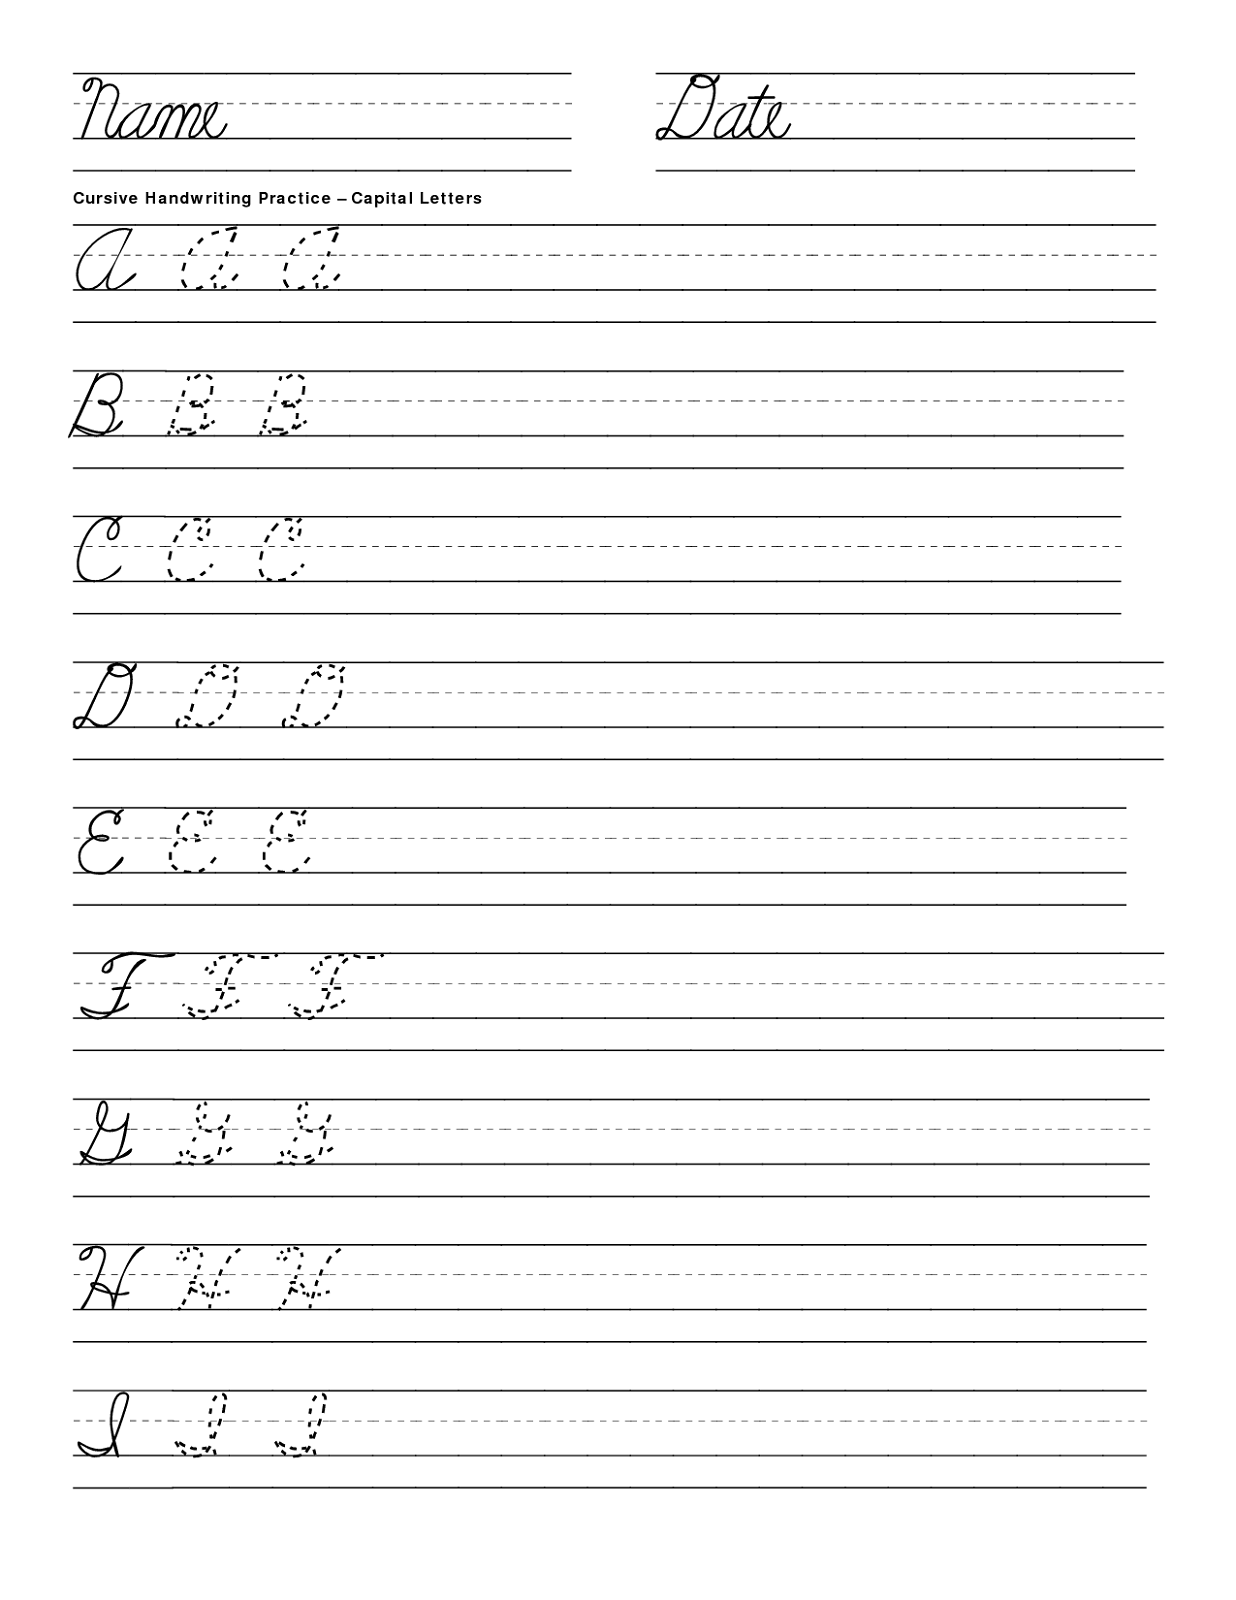 blank-handwriting-sheet